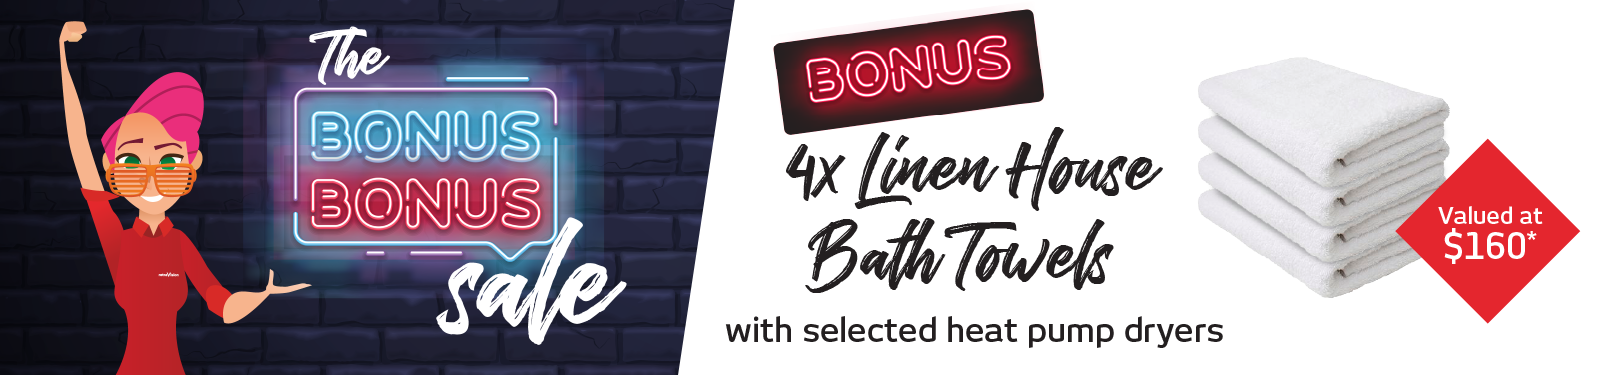 Bonus Set Of Linen House Bath Towels